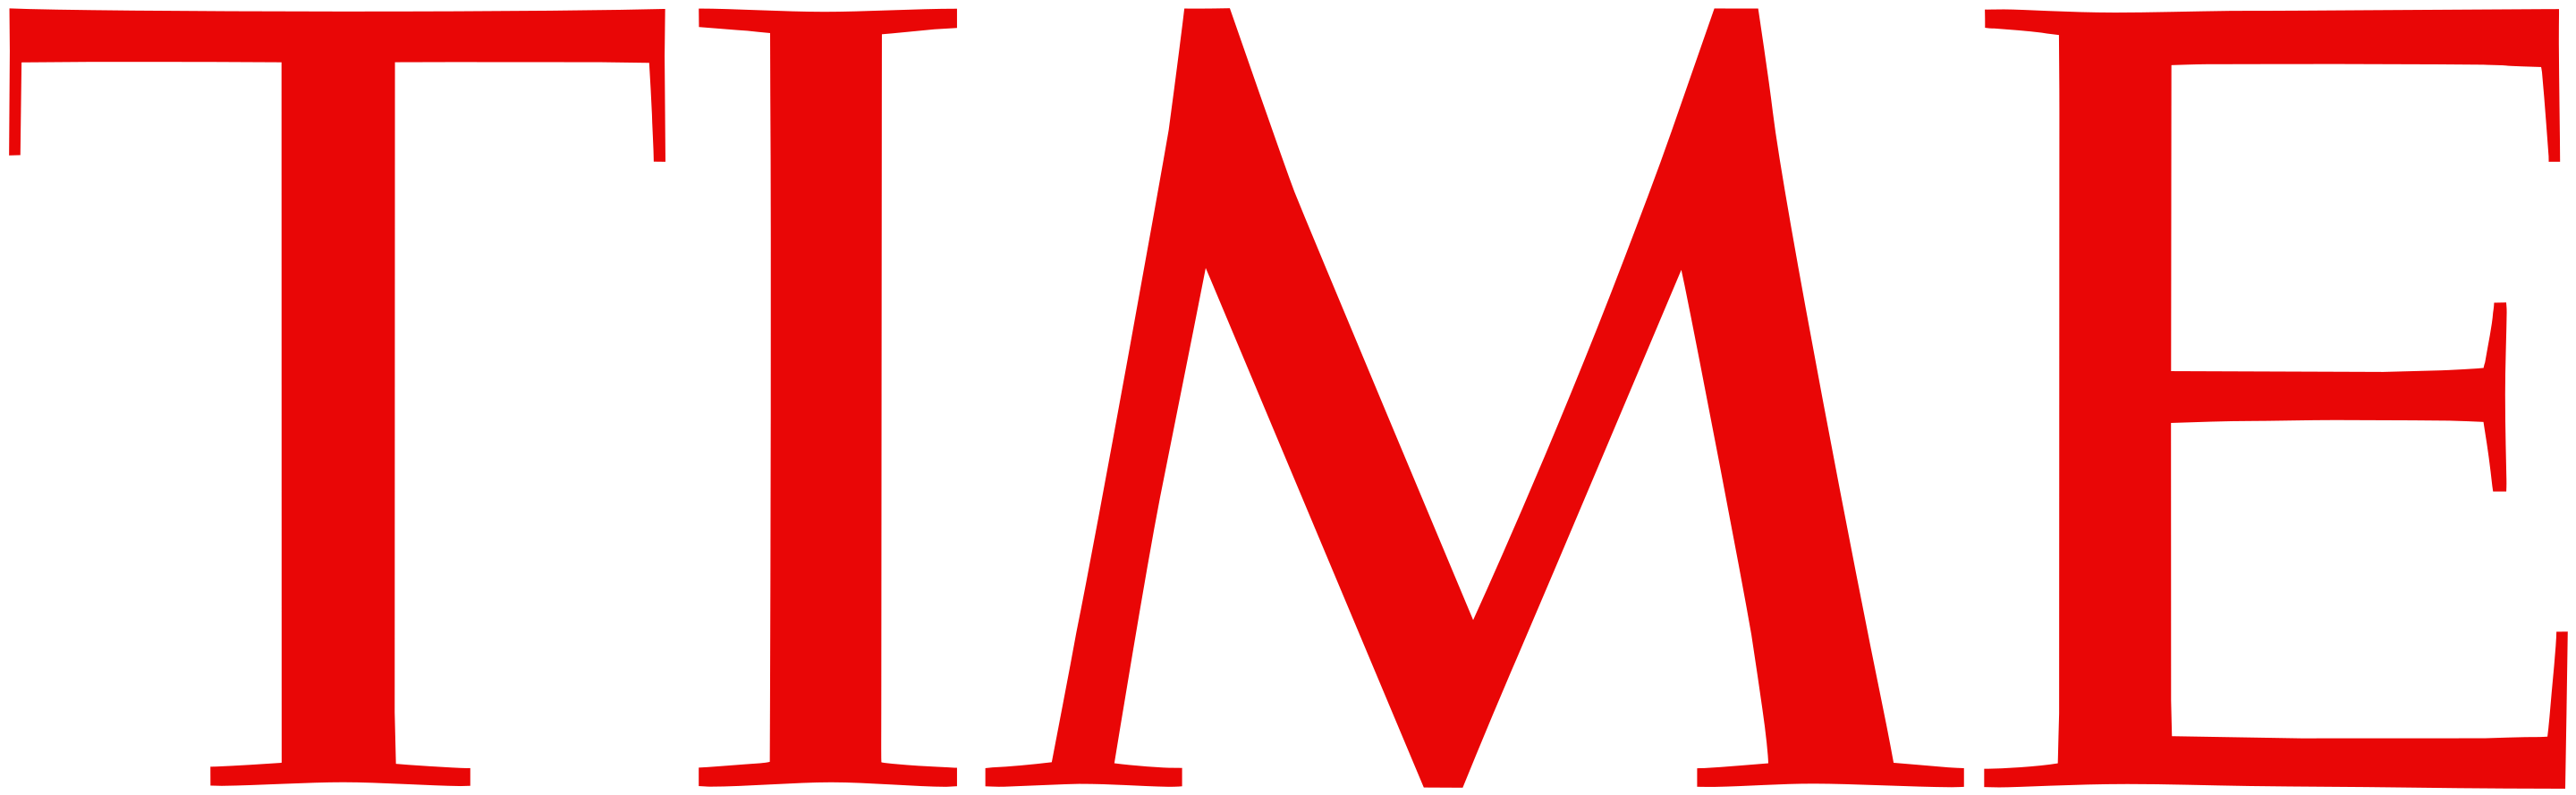 Time Magazine logo.svg